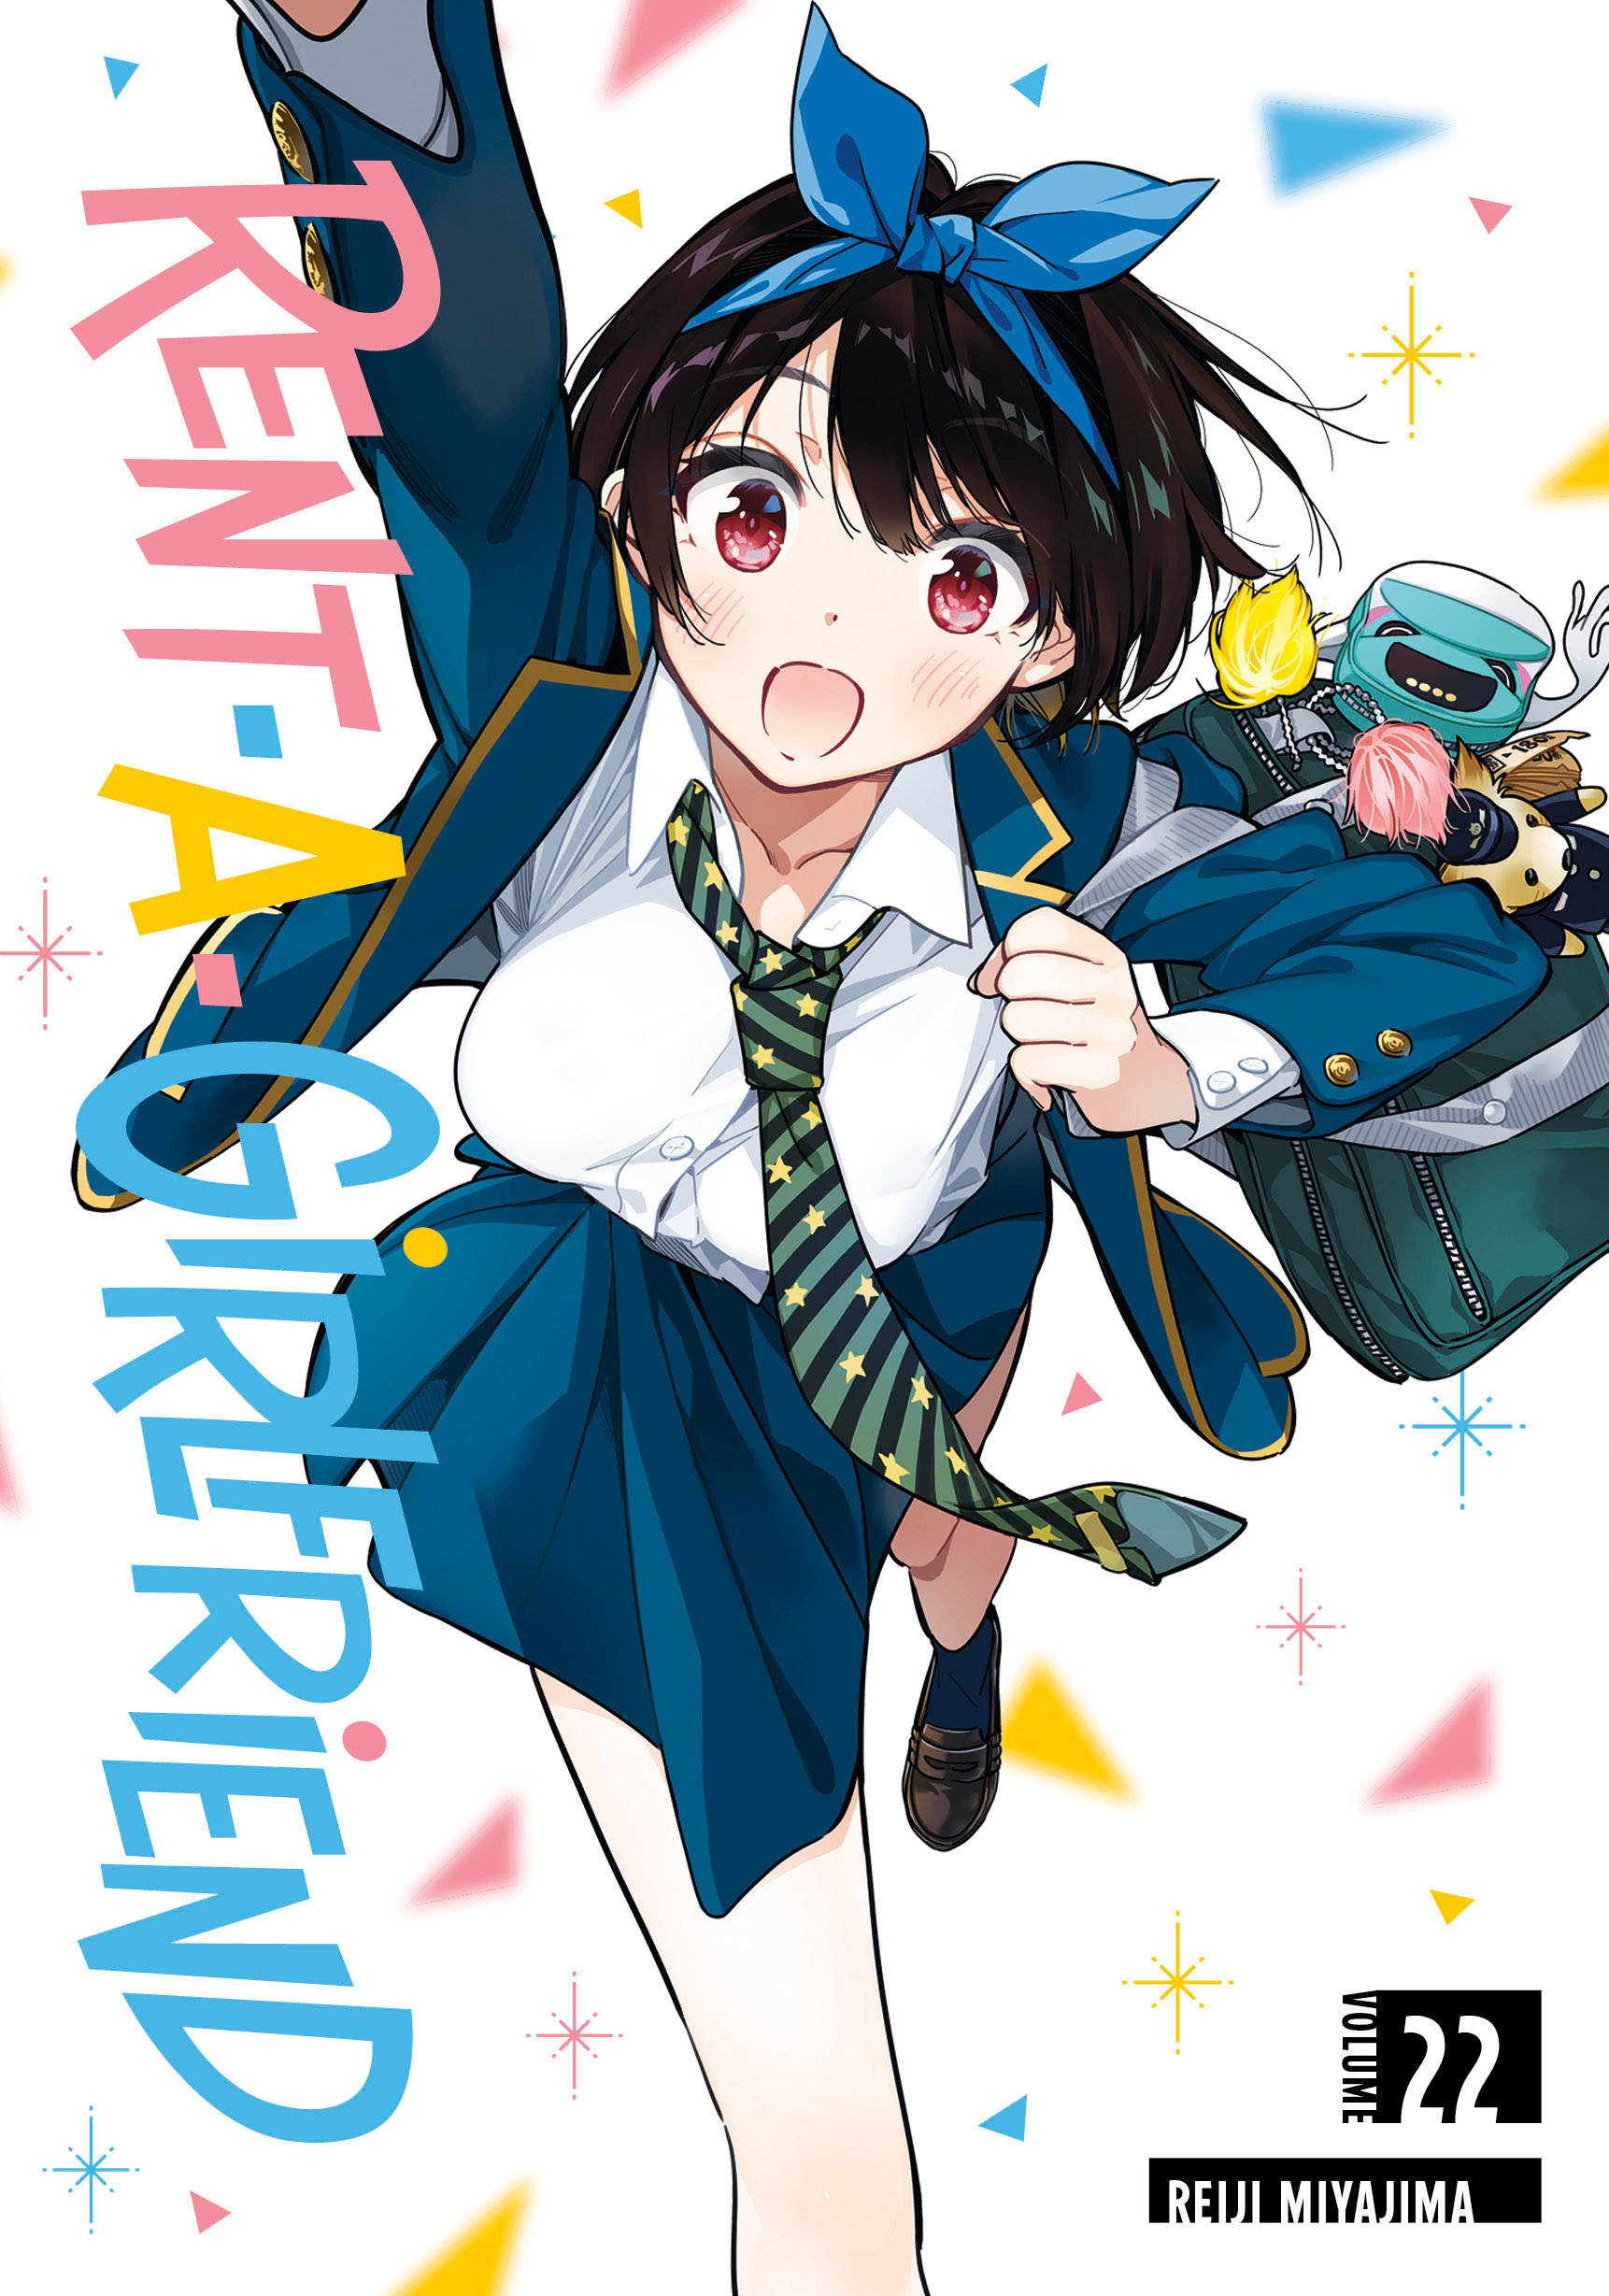 Rent-A-Girlfriend Manga Volume 22 (Mature)